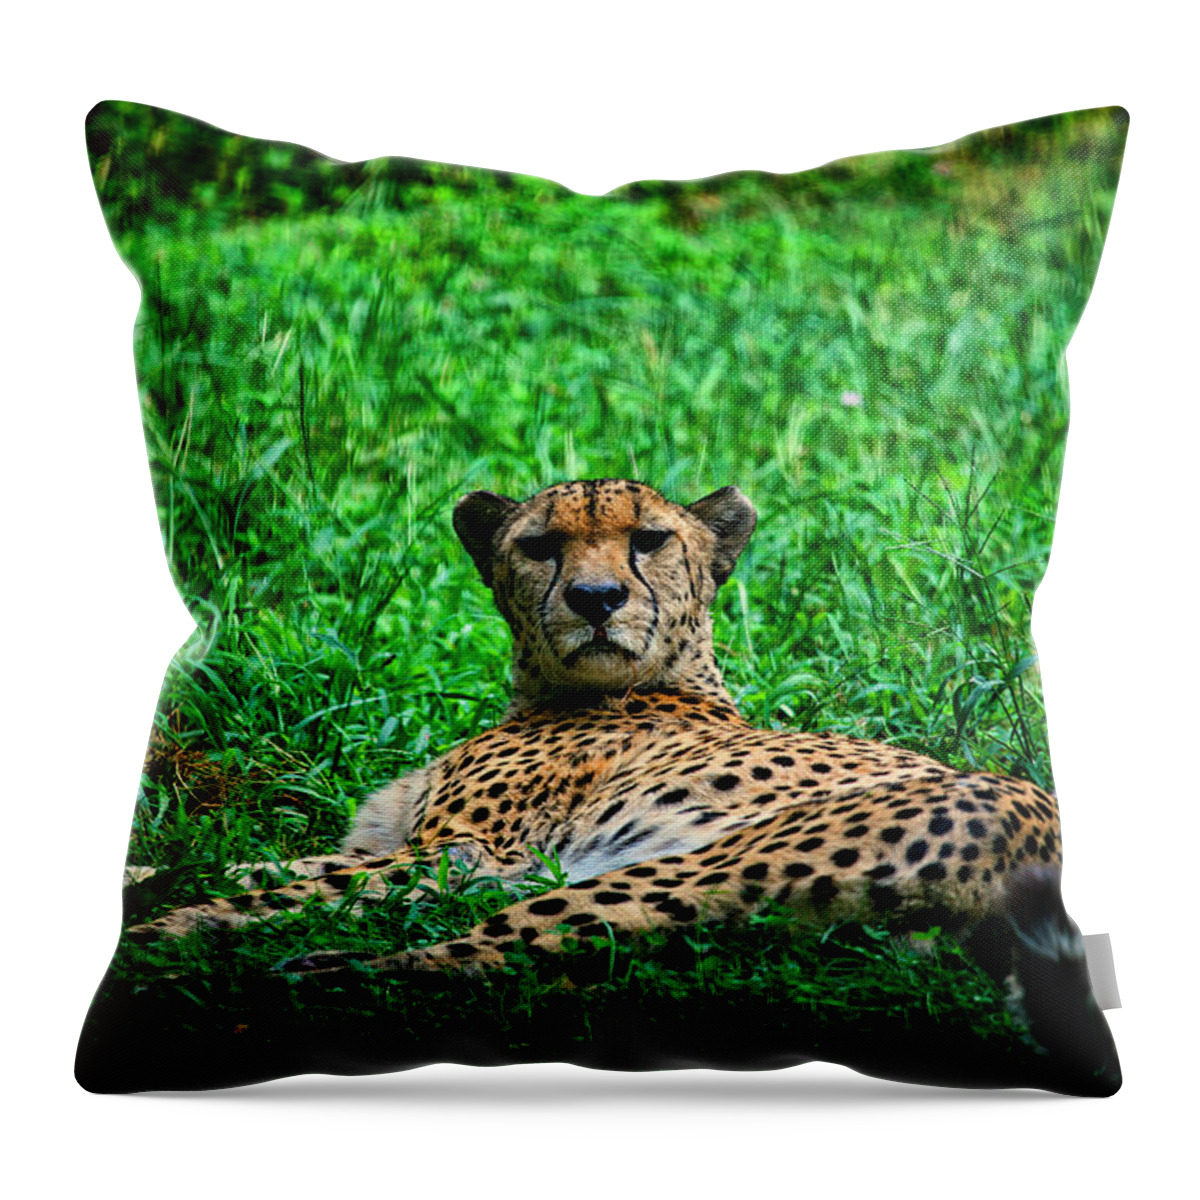 Cheetah Throw Pillow featuring the photograph Cheetah by Karol Livote